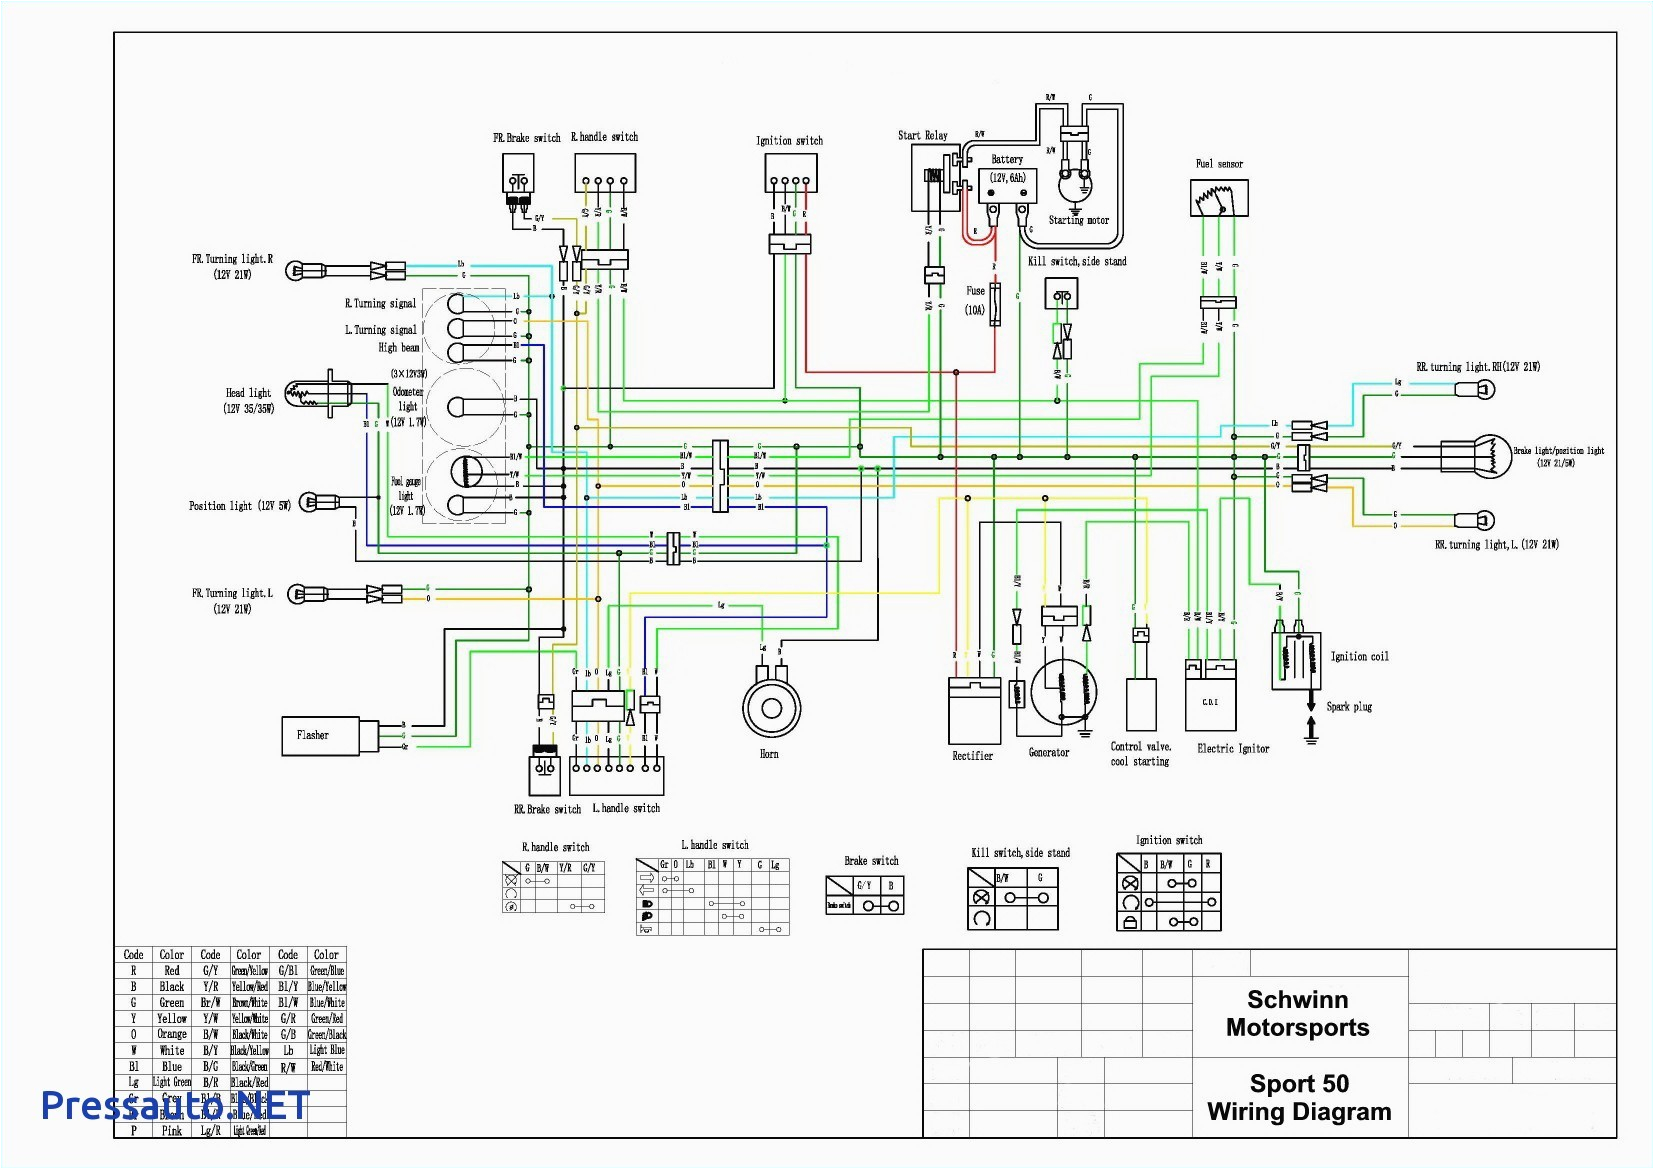 xingyue wiring diagram wiring diagram toolbox xingyue wiring diagram